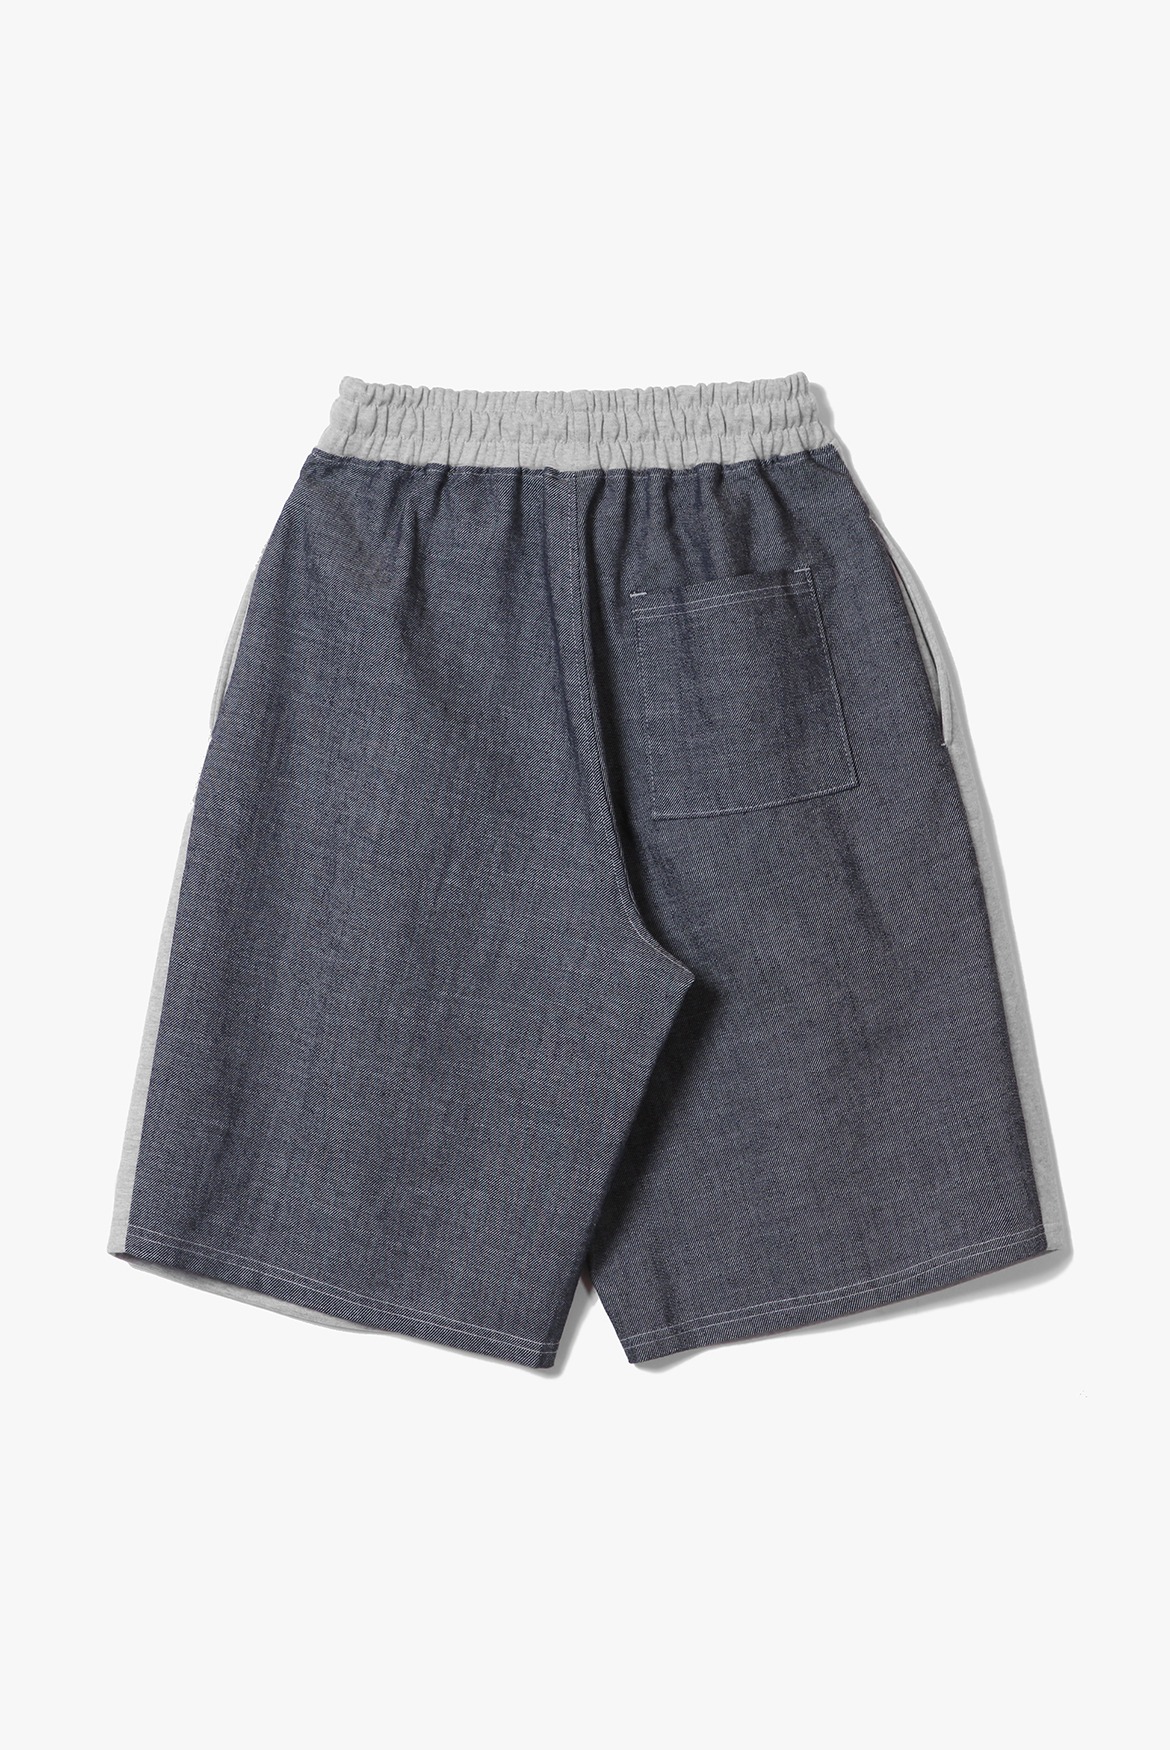 Deep One Tuck Half Shorts [Grey/Indigo]